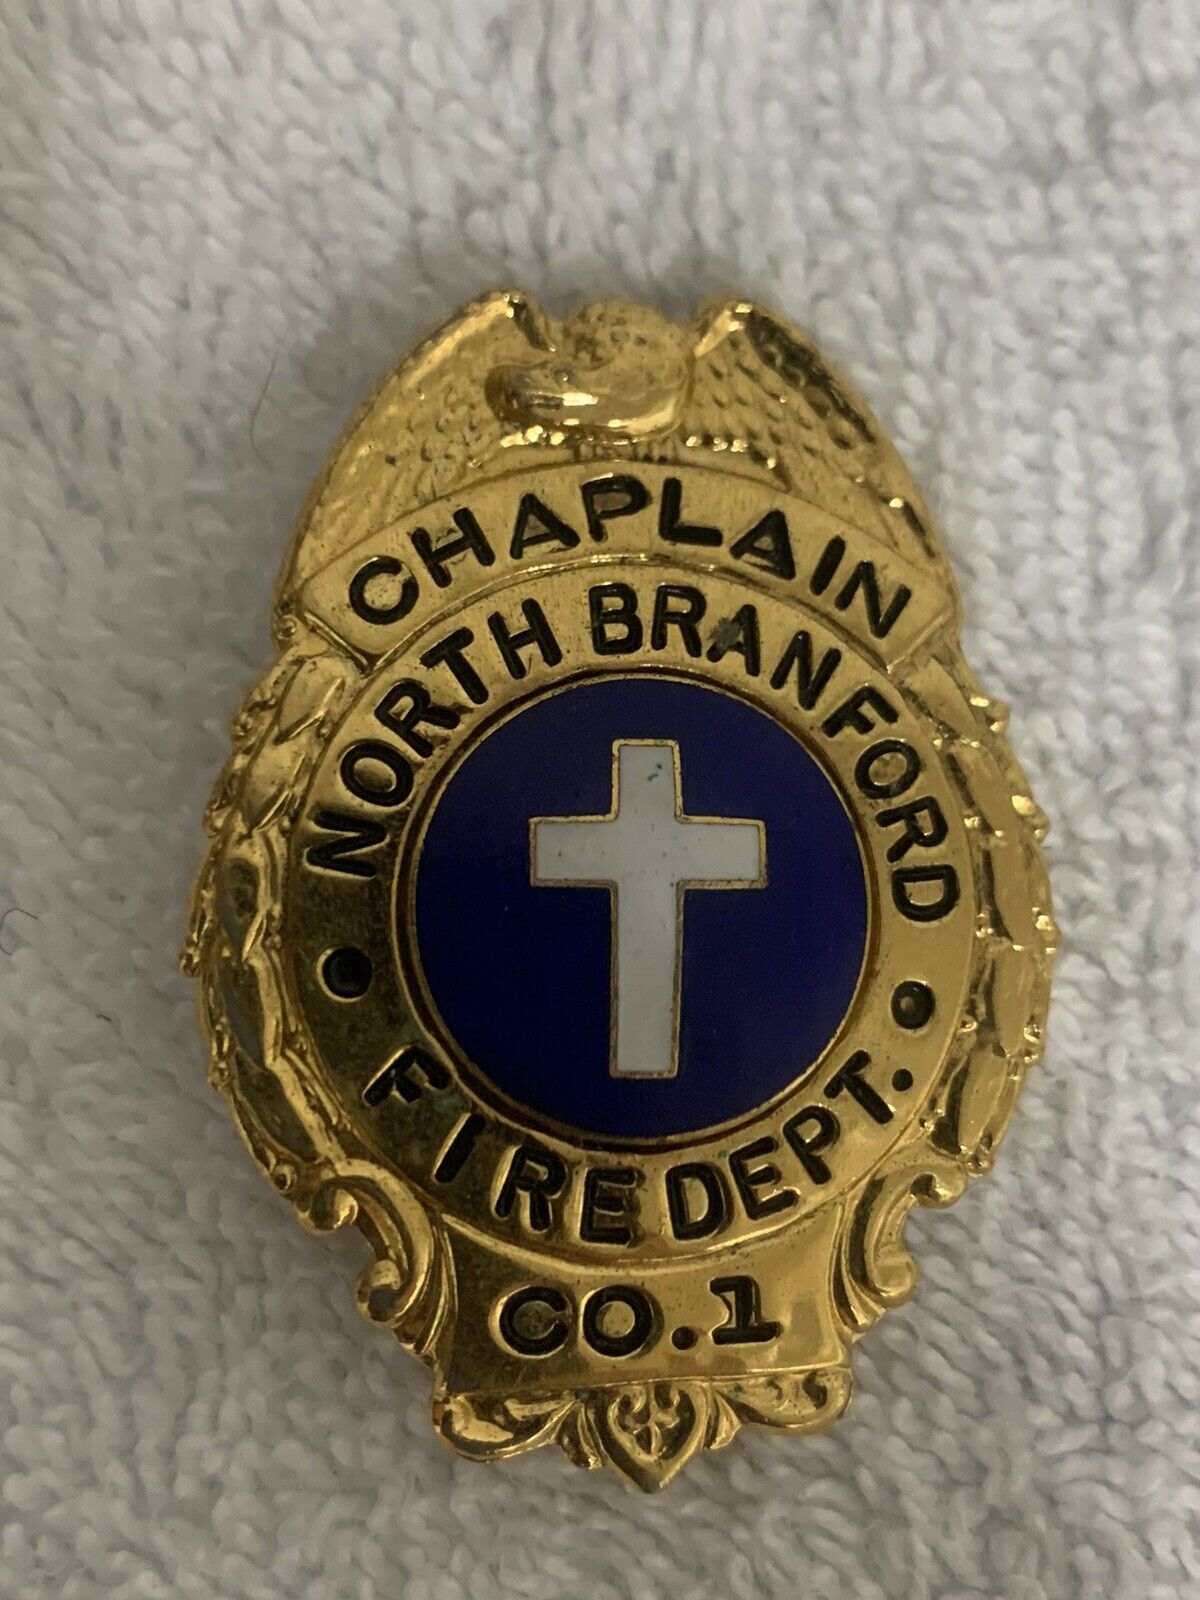 Vintage Obsolete Fireman's  Gold Badge Fire Dept. Chaplain North Bradford Co.1 